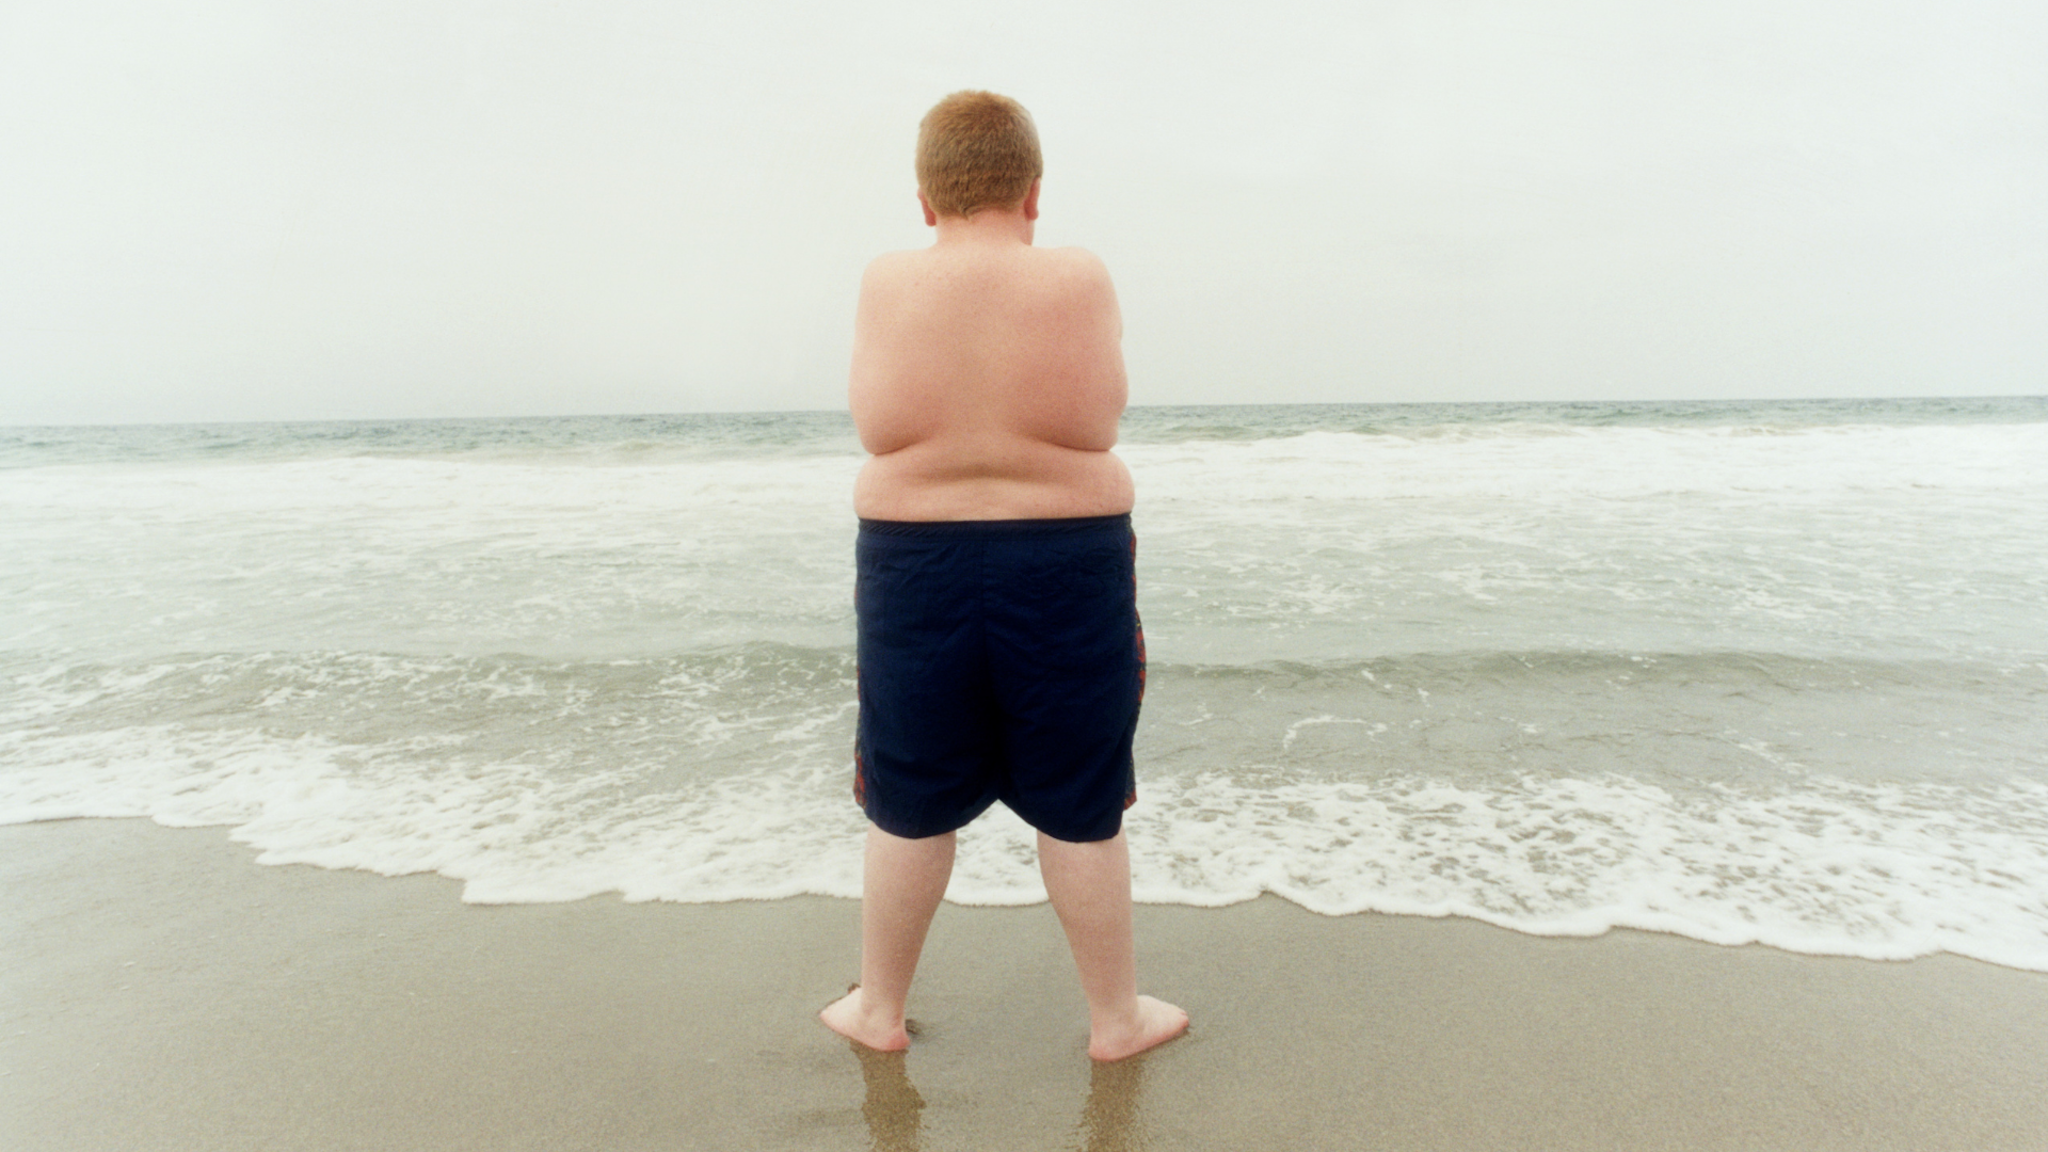 Overweight boy (10-12) standing on beach- stock photo Zuma Beach, Malibu, California, USA.